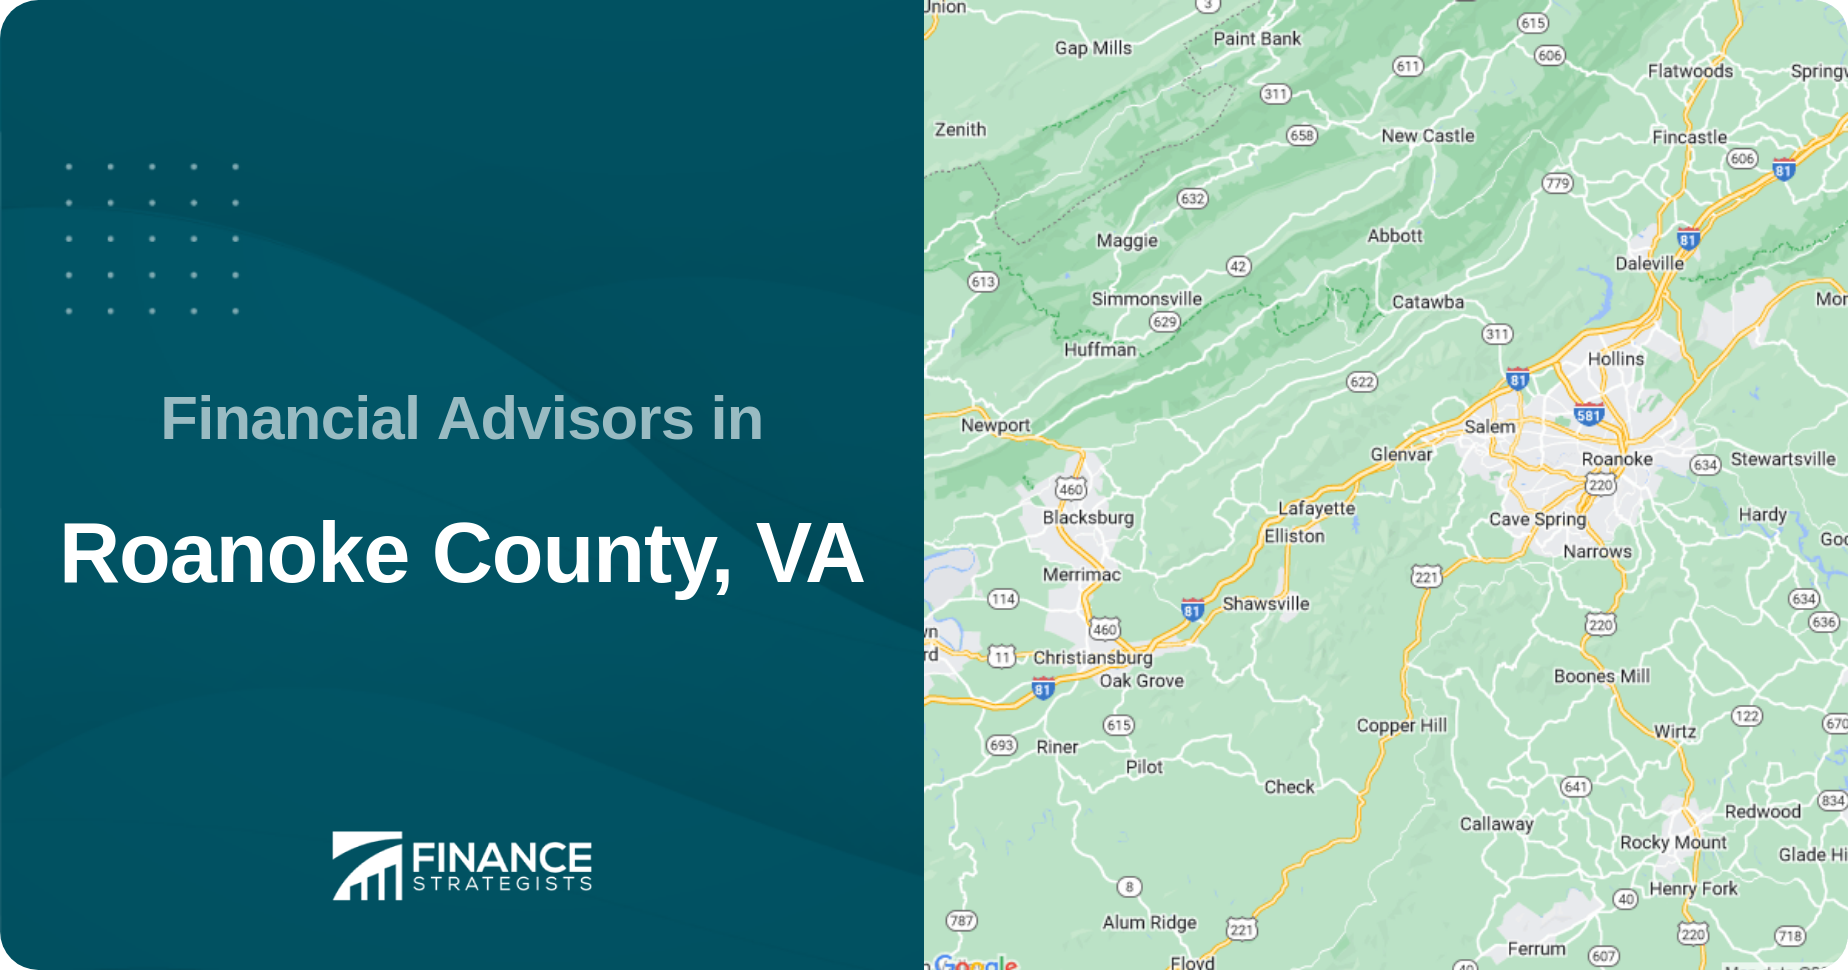 Financial Advisors in Roanoke County, VA